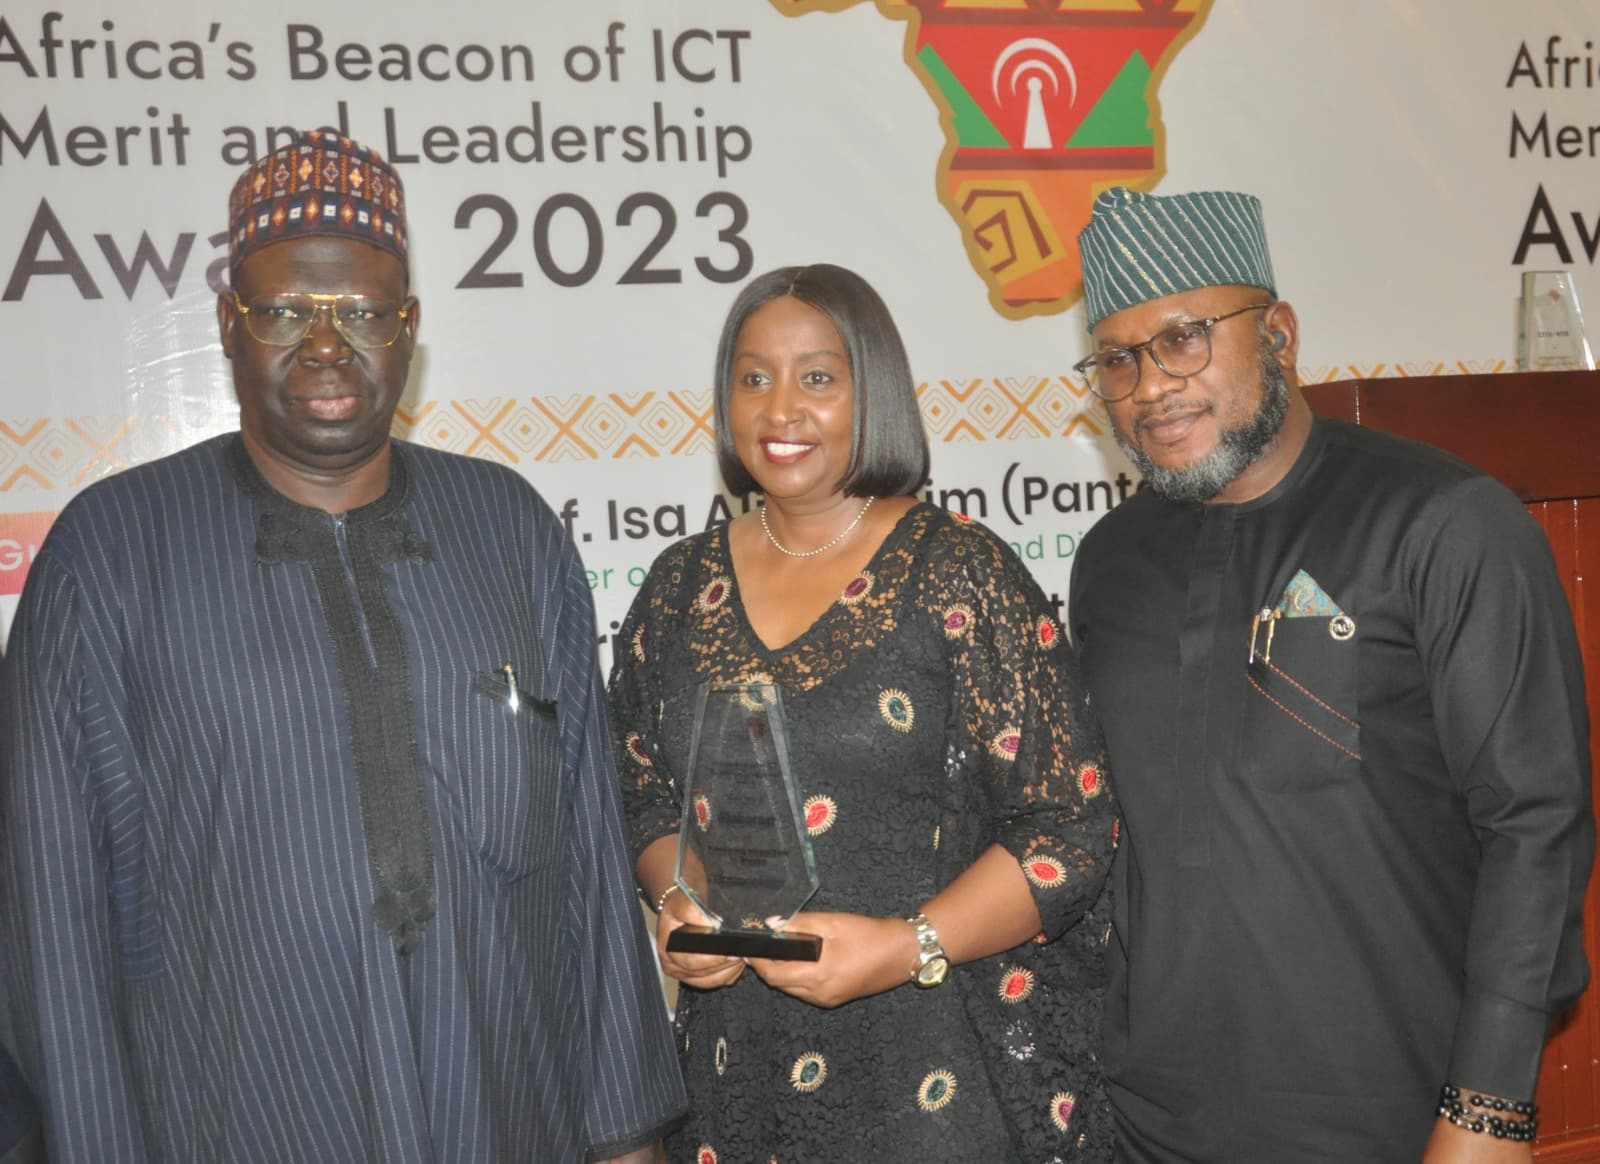 Glo wins 'Africa's Beacon of ICT' honour award